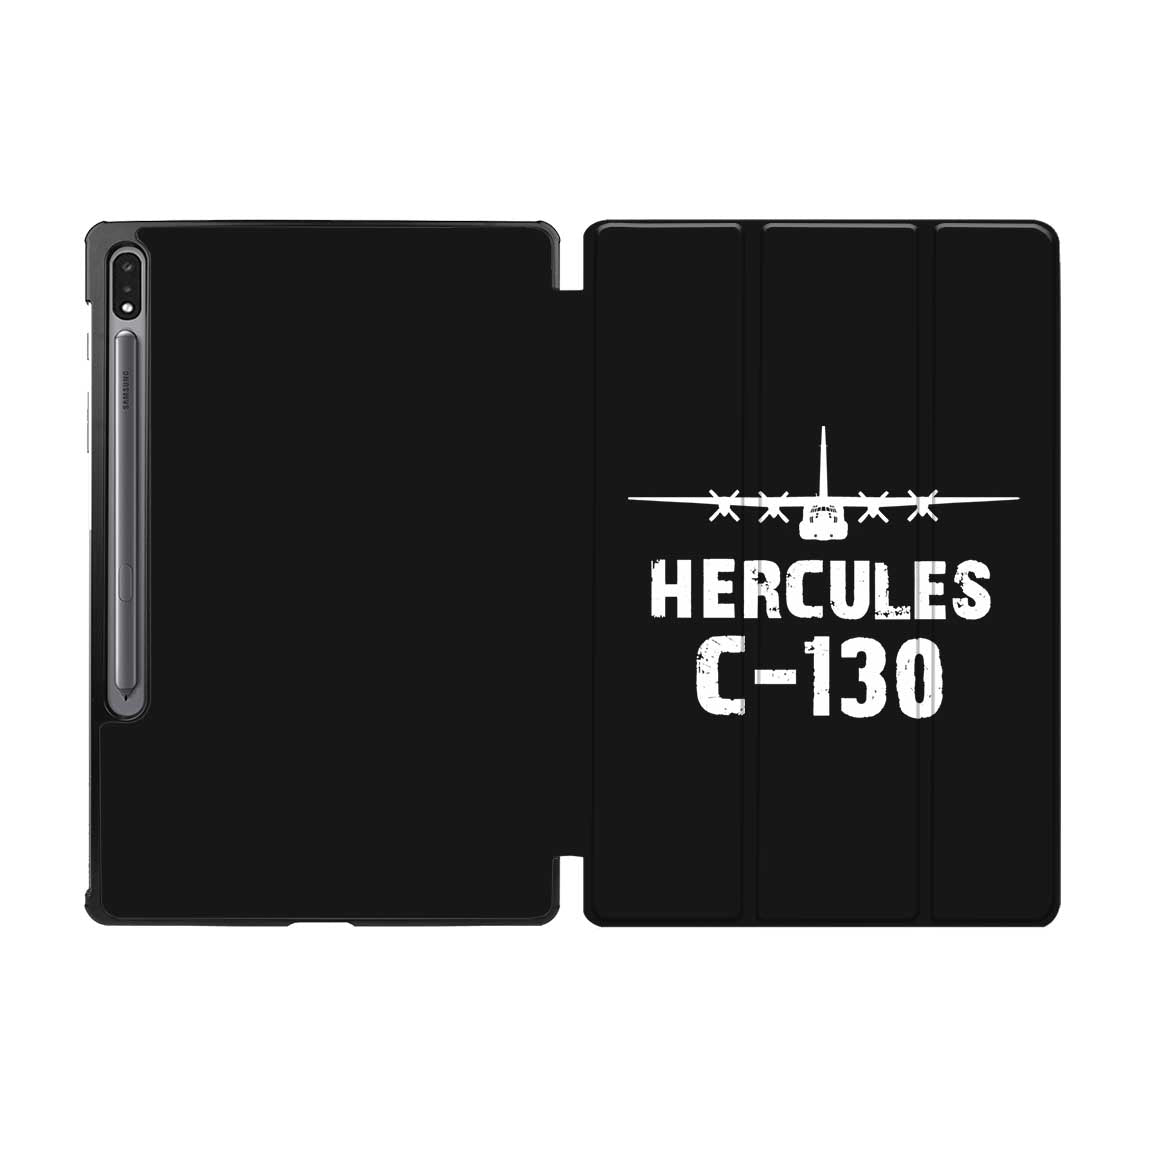 Hercules C-130 & Plane Designed Samsung Tablet Cases